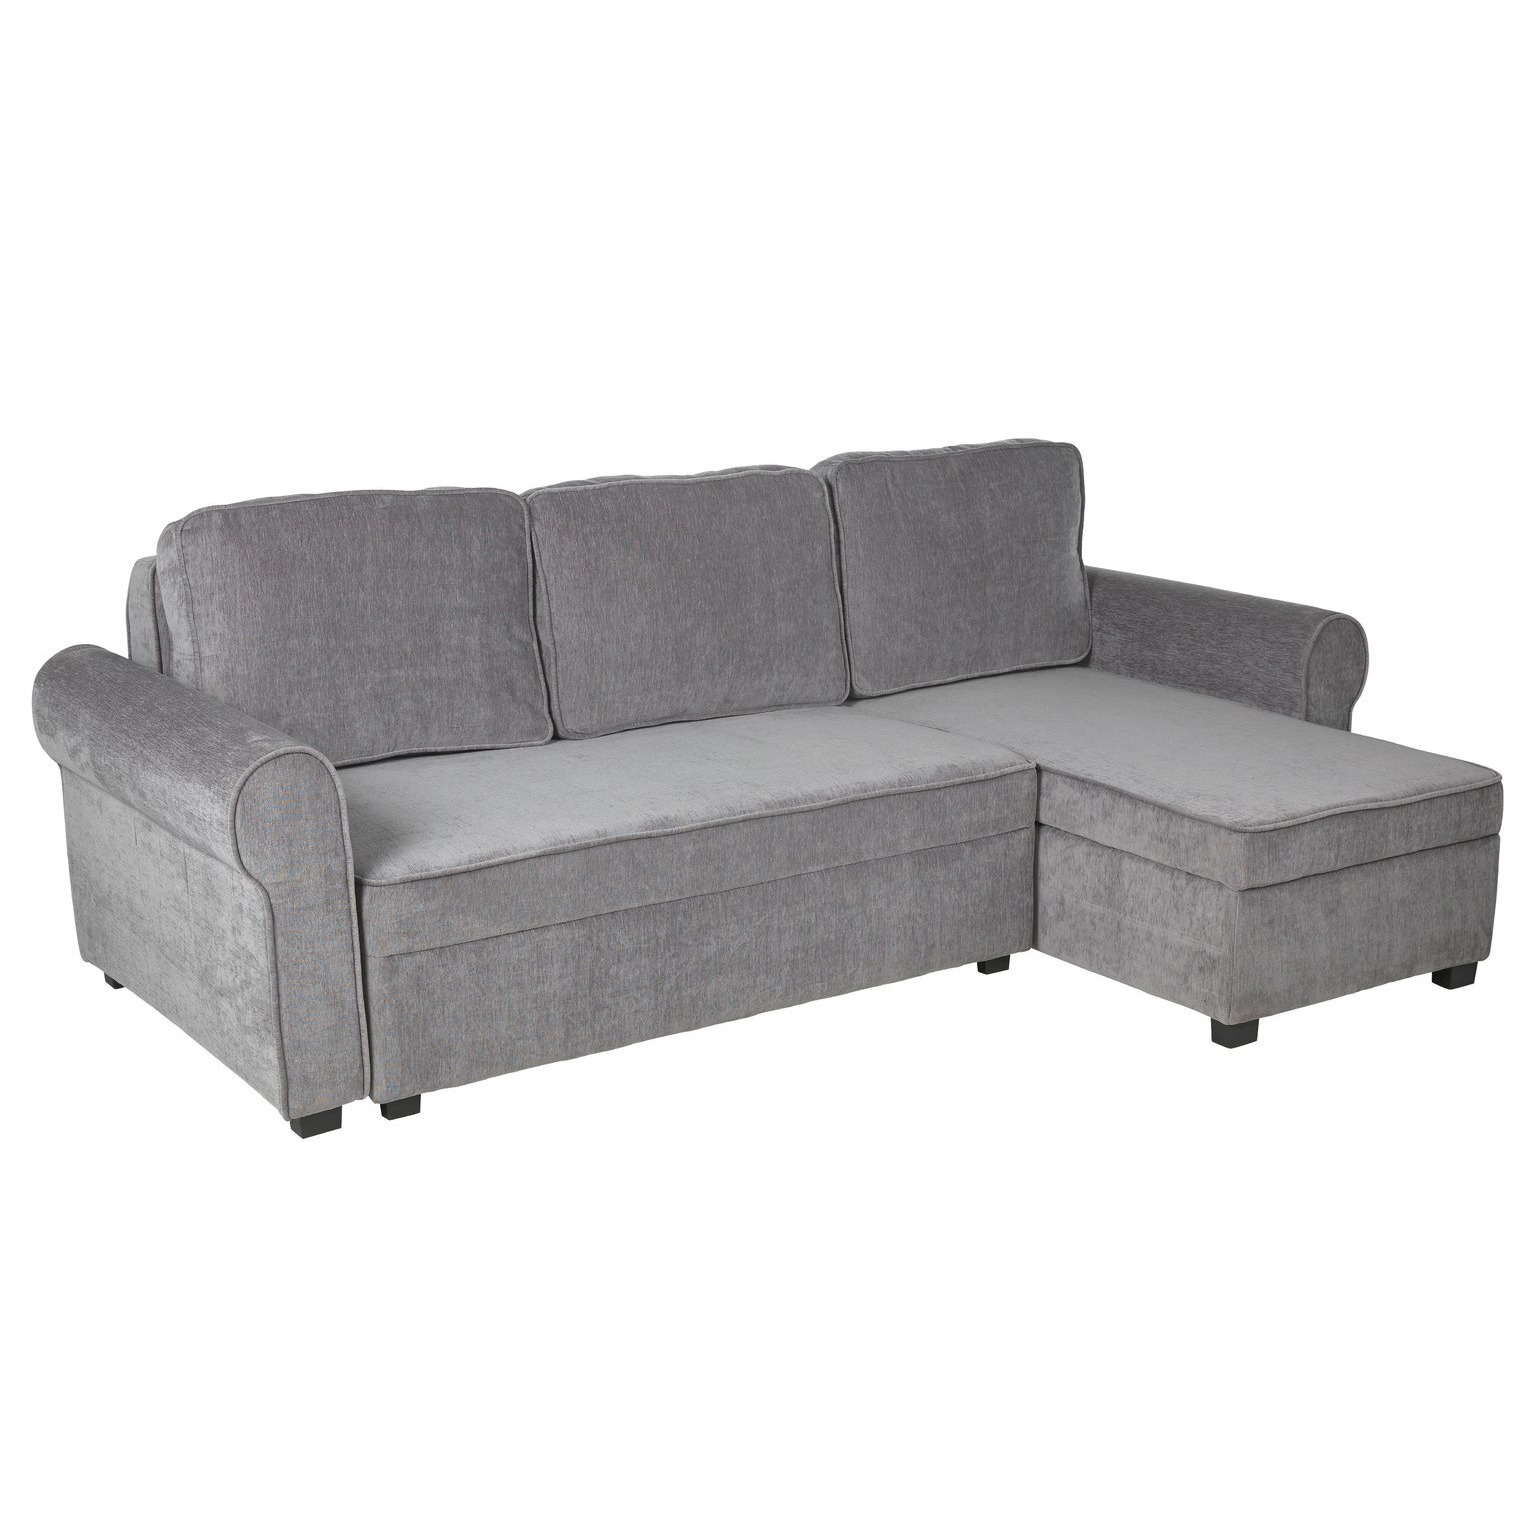 Argos Home Addie Fabric Corner Sofa Bed - Grey - image 1